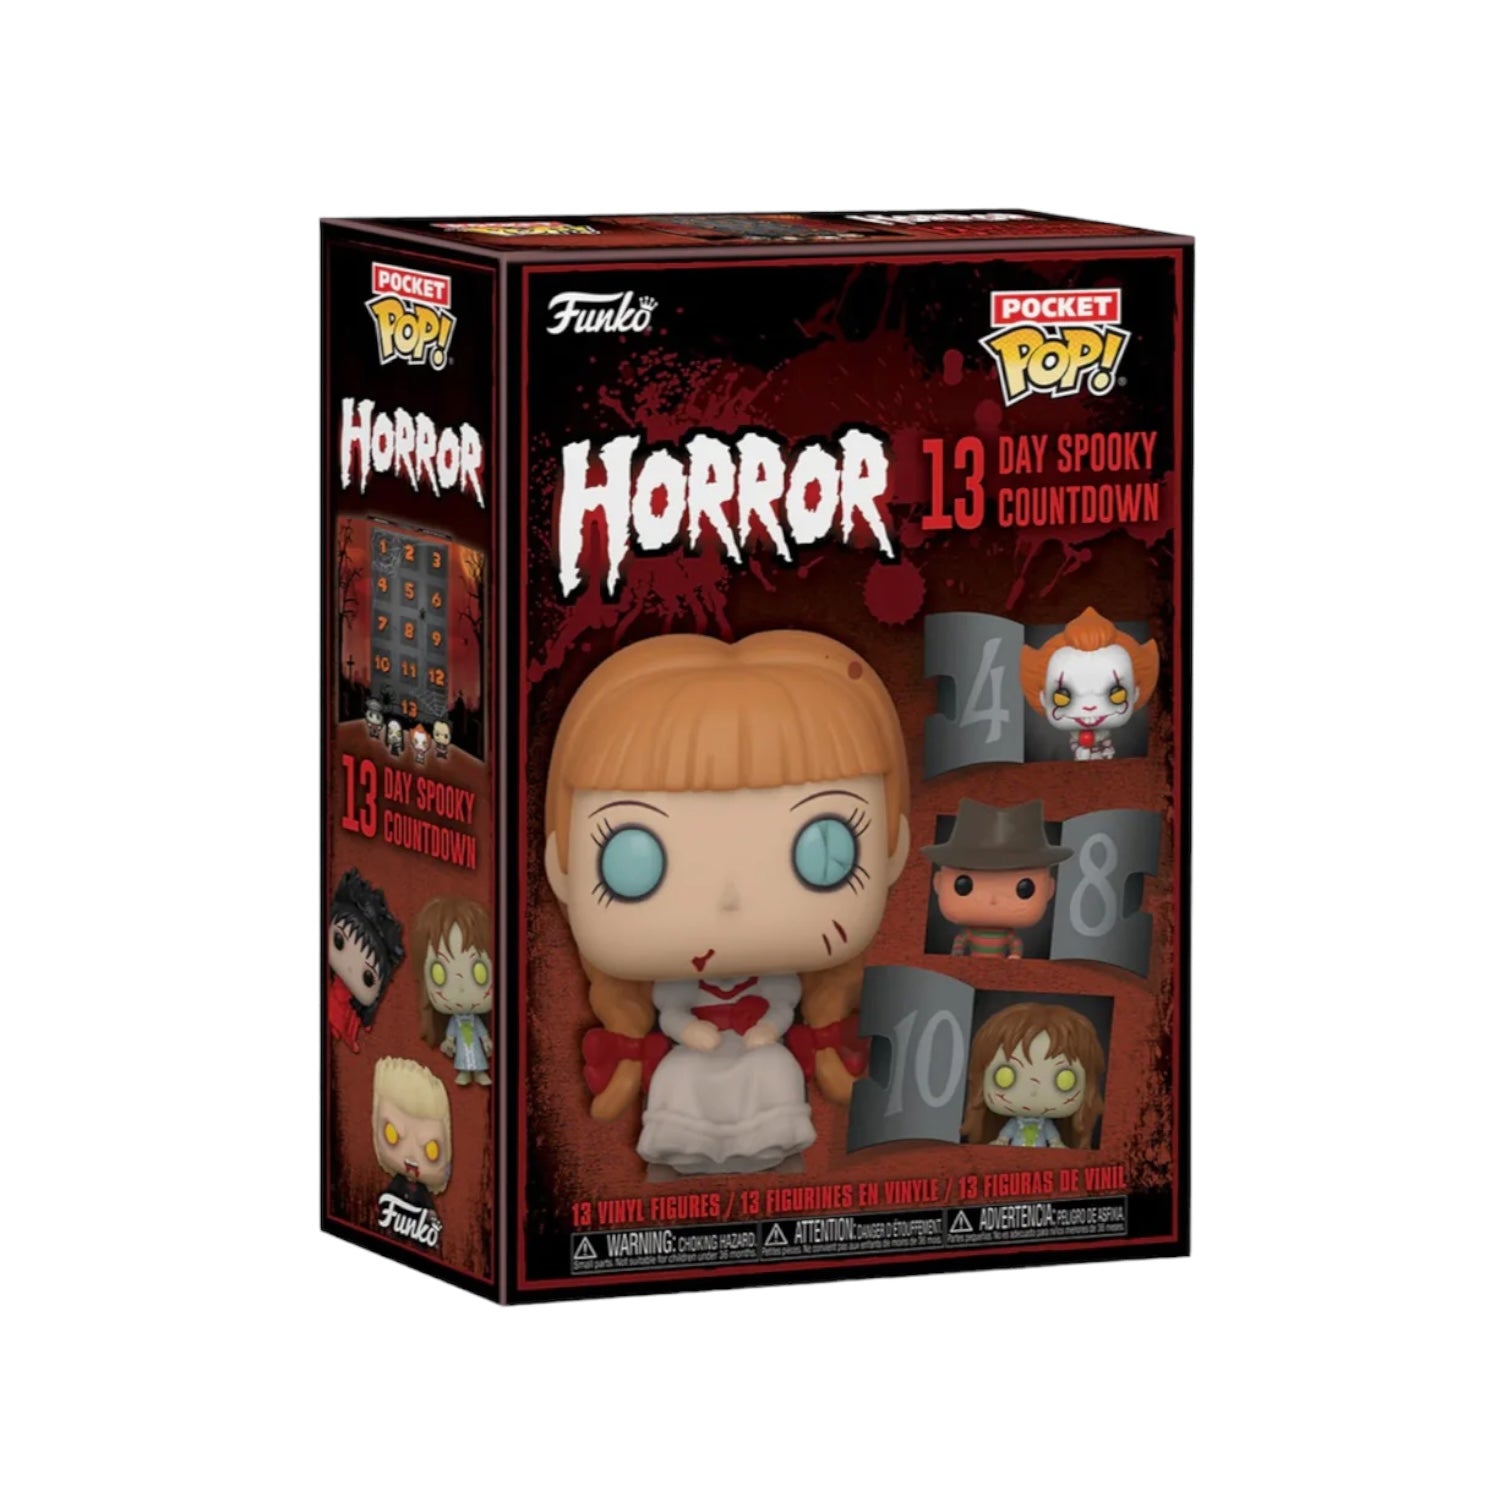 Horror 13 Day Funko Pocket Pop! - Spooky Calendar